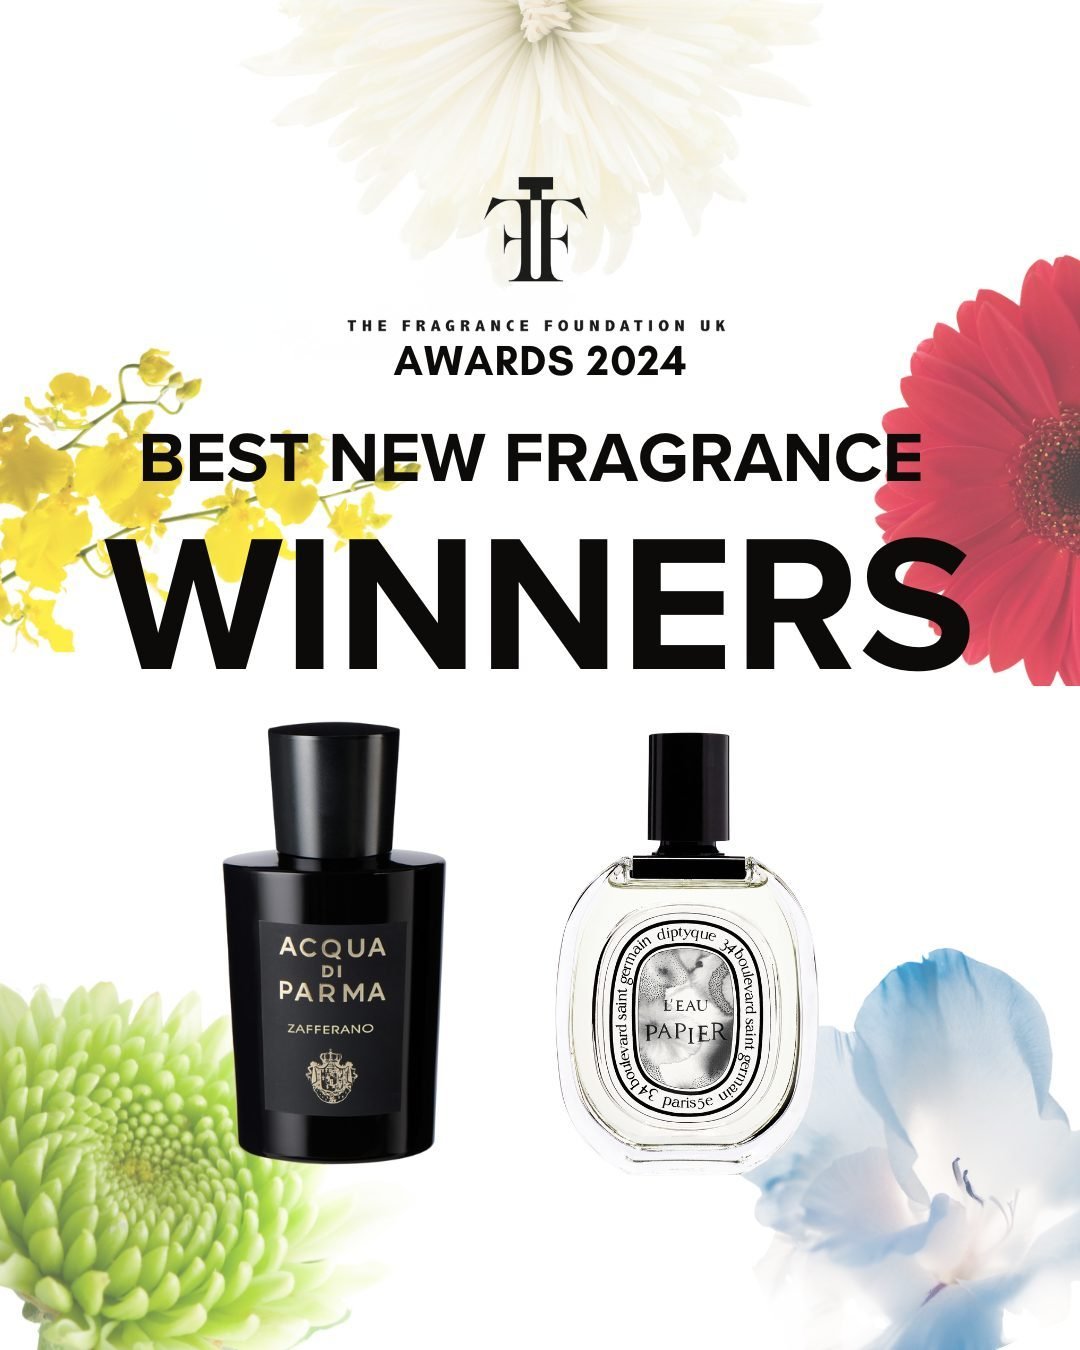 Winners of The Fragrance Foundation UK Best New Fragrance Award... 
@AcquadiParma &ndash; Zafferano Eau de Parfum 
@Diptyque &ndash; L&rsquo;Eau Papier Eau de Toilette by @firmenichfine Principal Perfumer @fabnose 
Congratulations!

#TFFAwards2024 #W